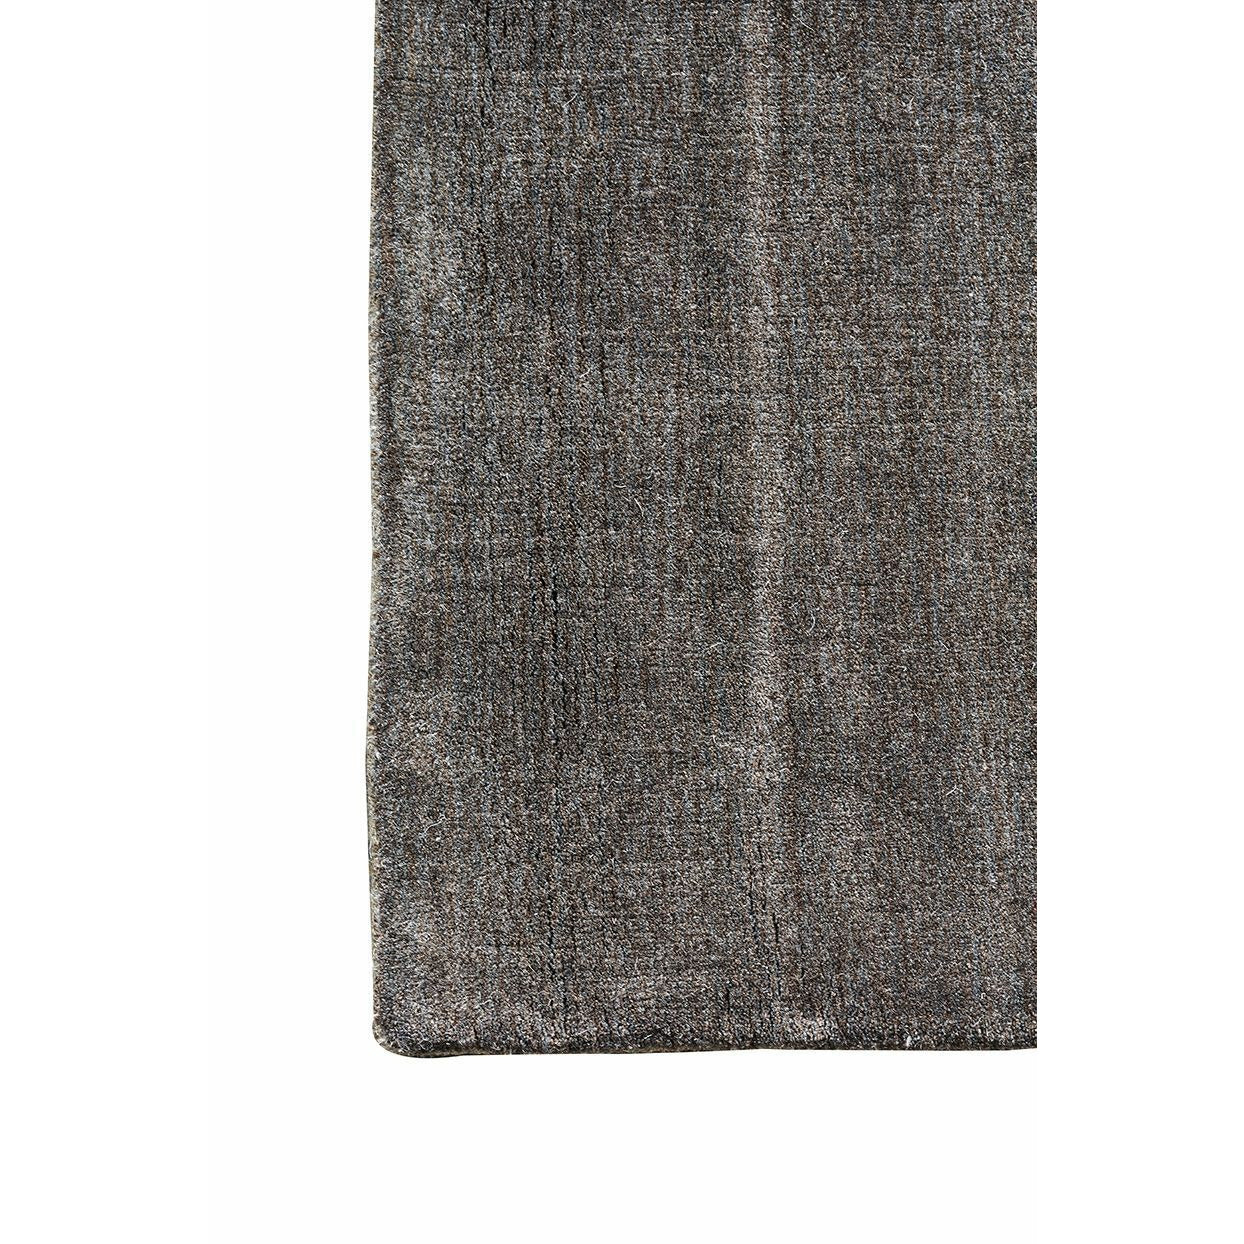 Massimo Jorden bambu matta varm grå, 250x300 cm